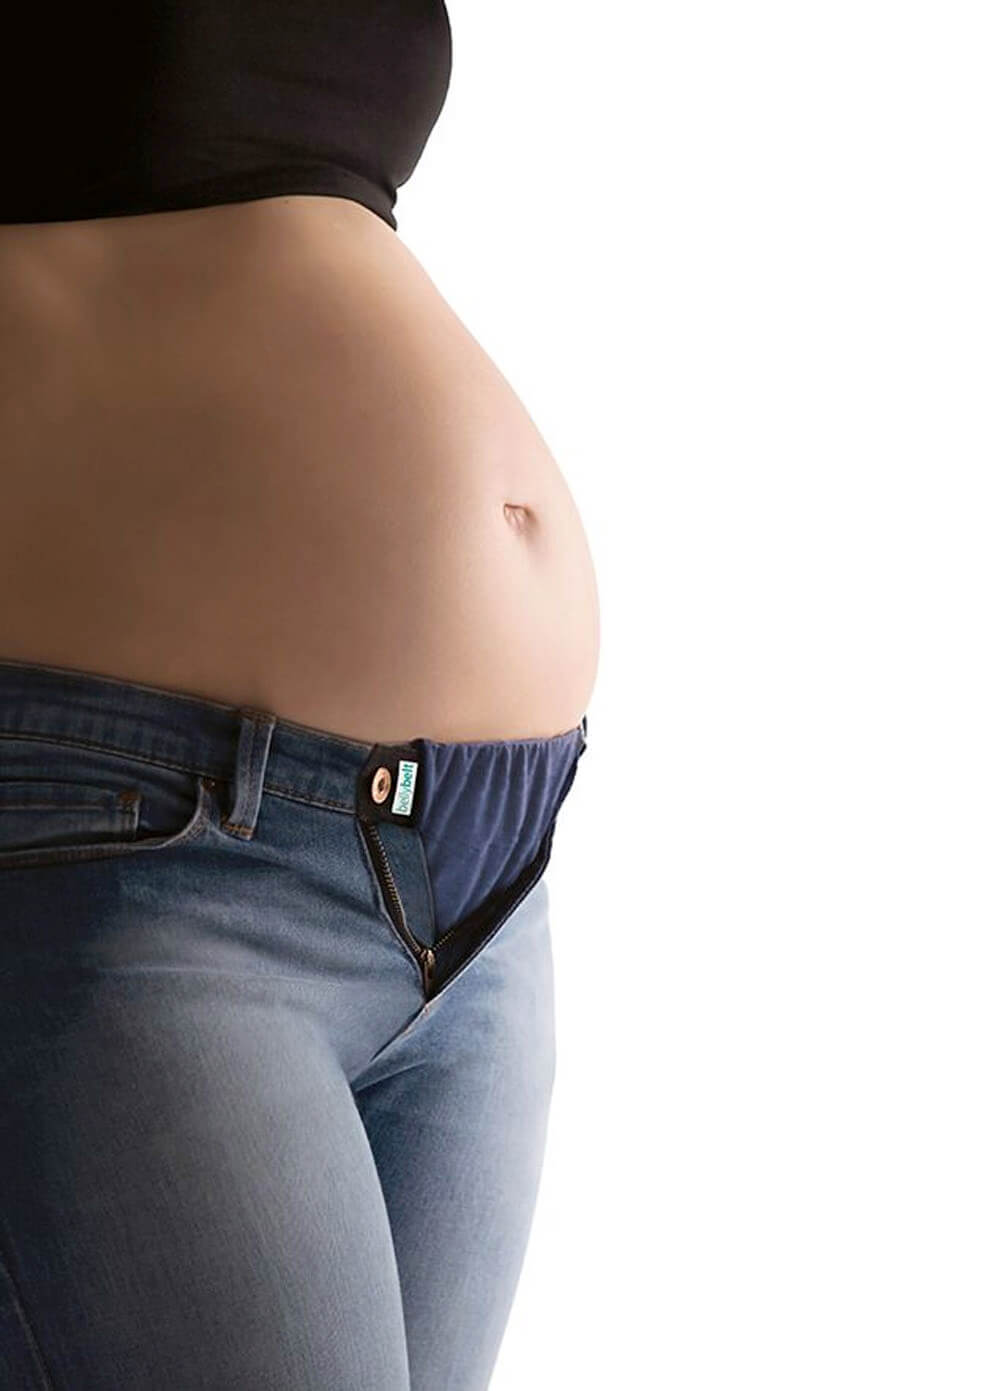 Belly Belt Maternity Pants/Skirt Extender by Fertilemind 